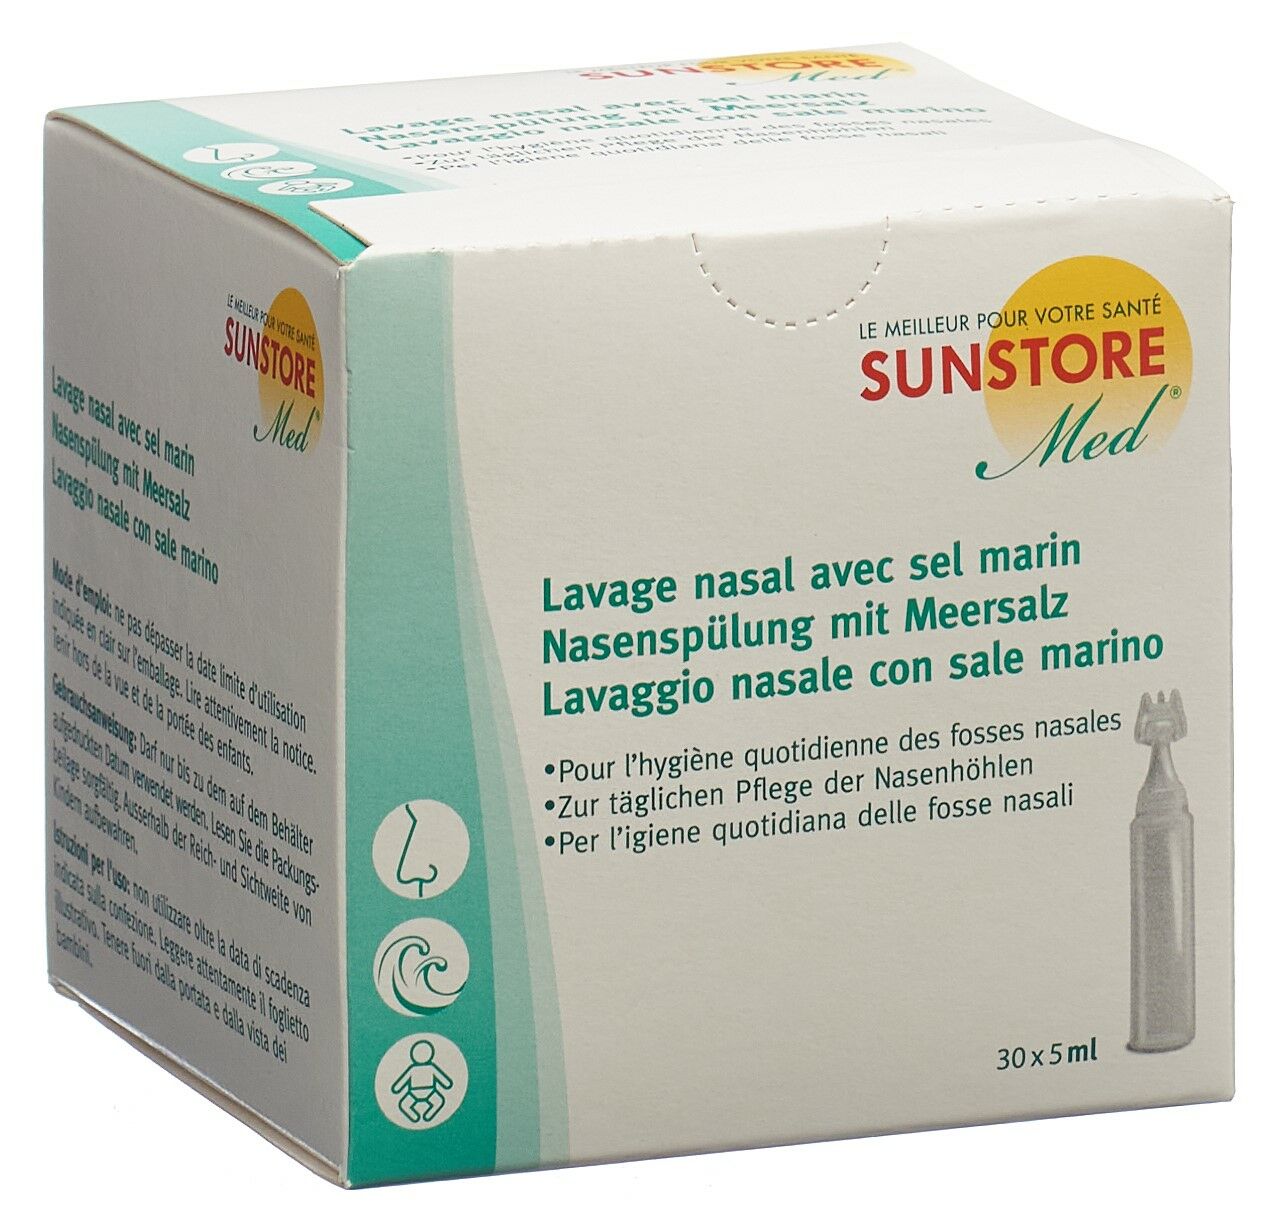 SUN STORE Med lavage nasal avec sel marin 30 monodos 5 ml